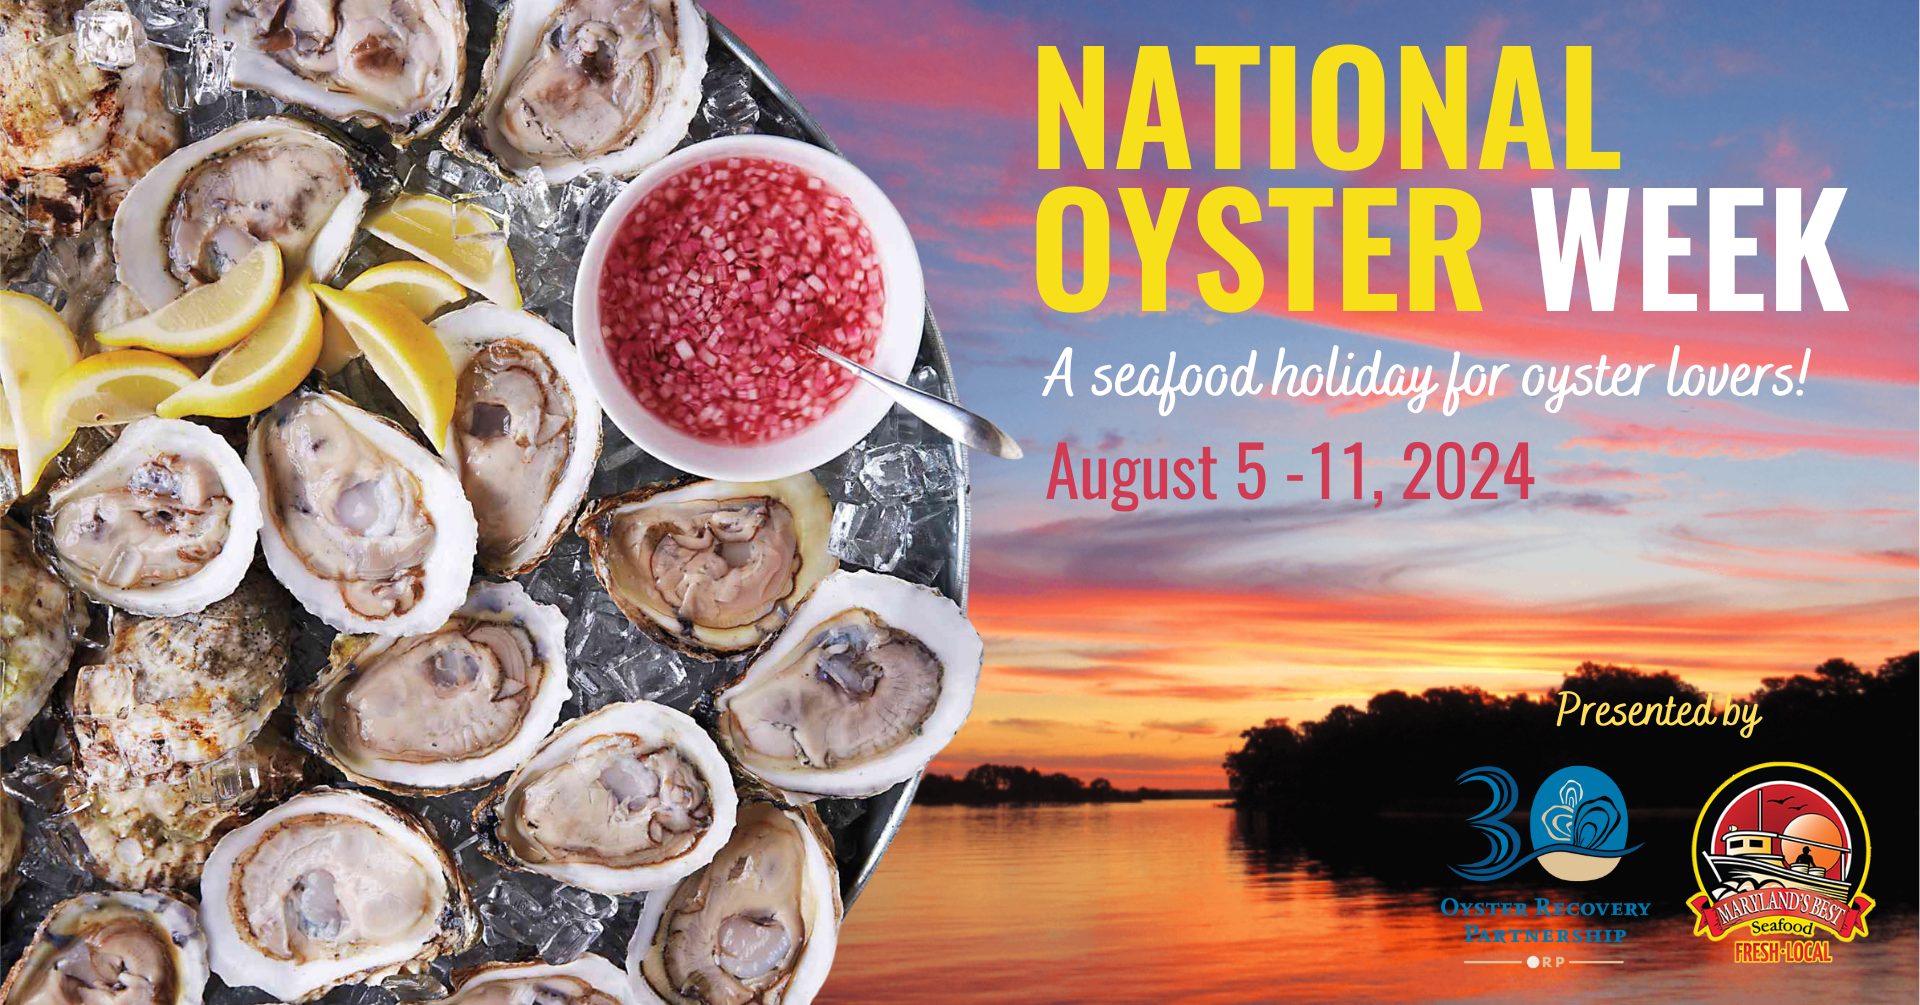 Oysters on platter. Chesapeake sunset background.